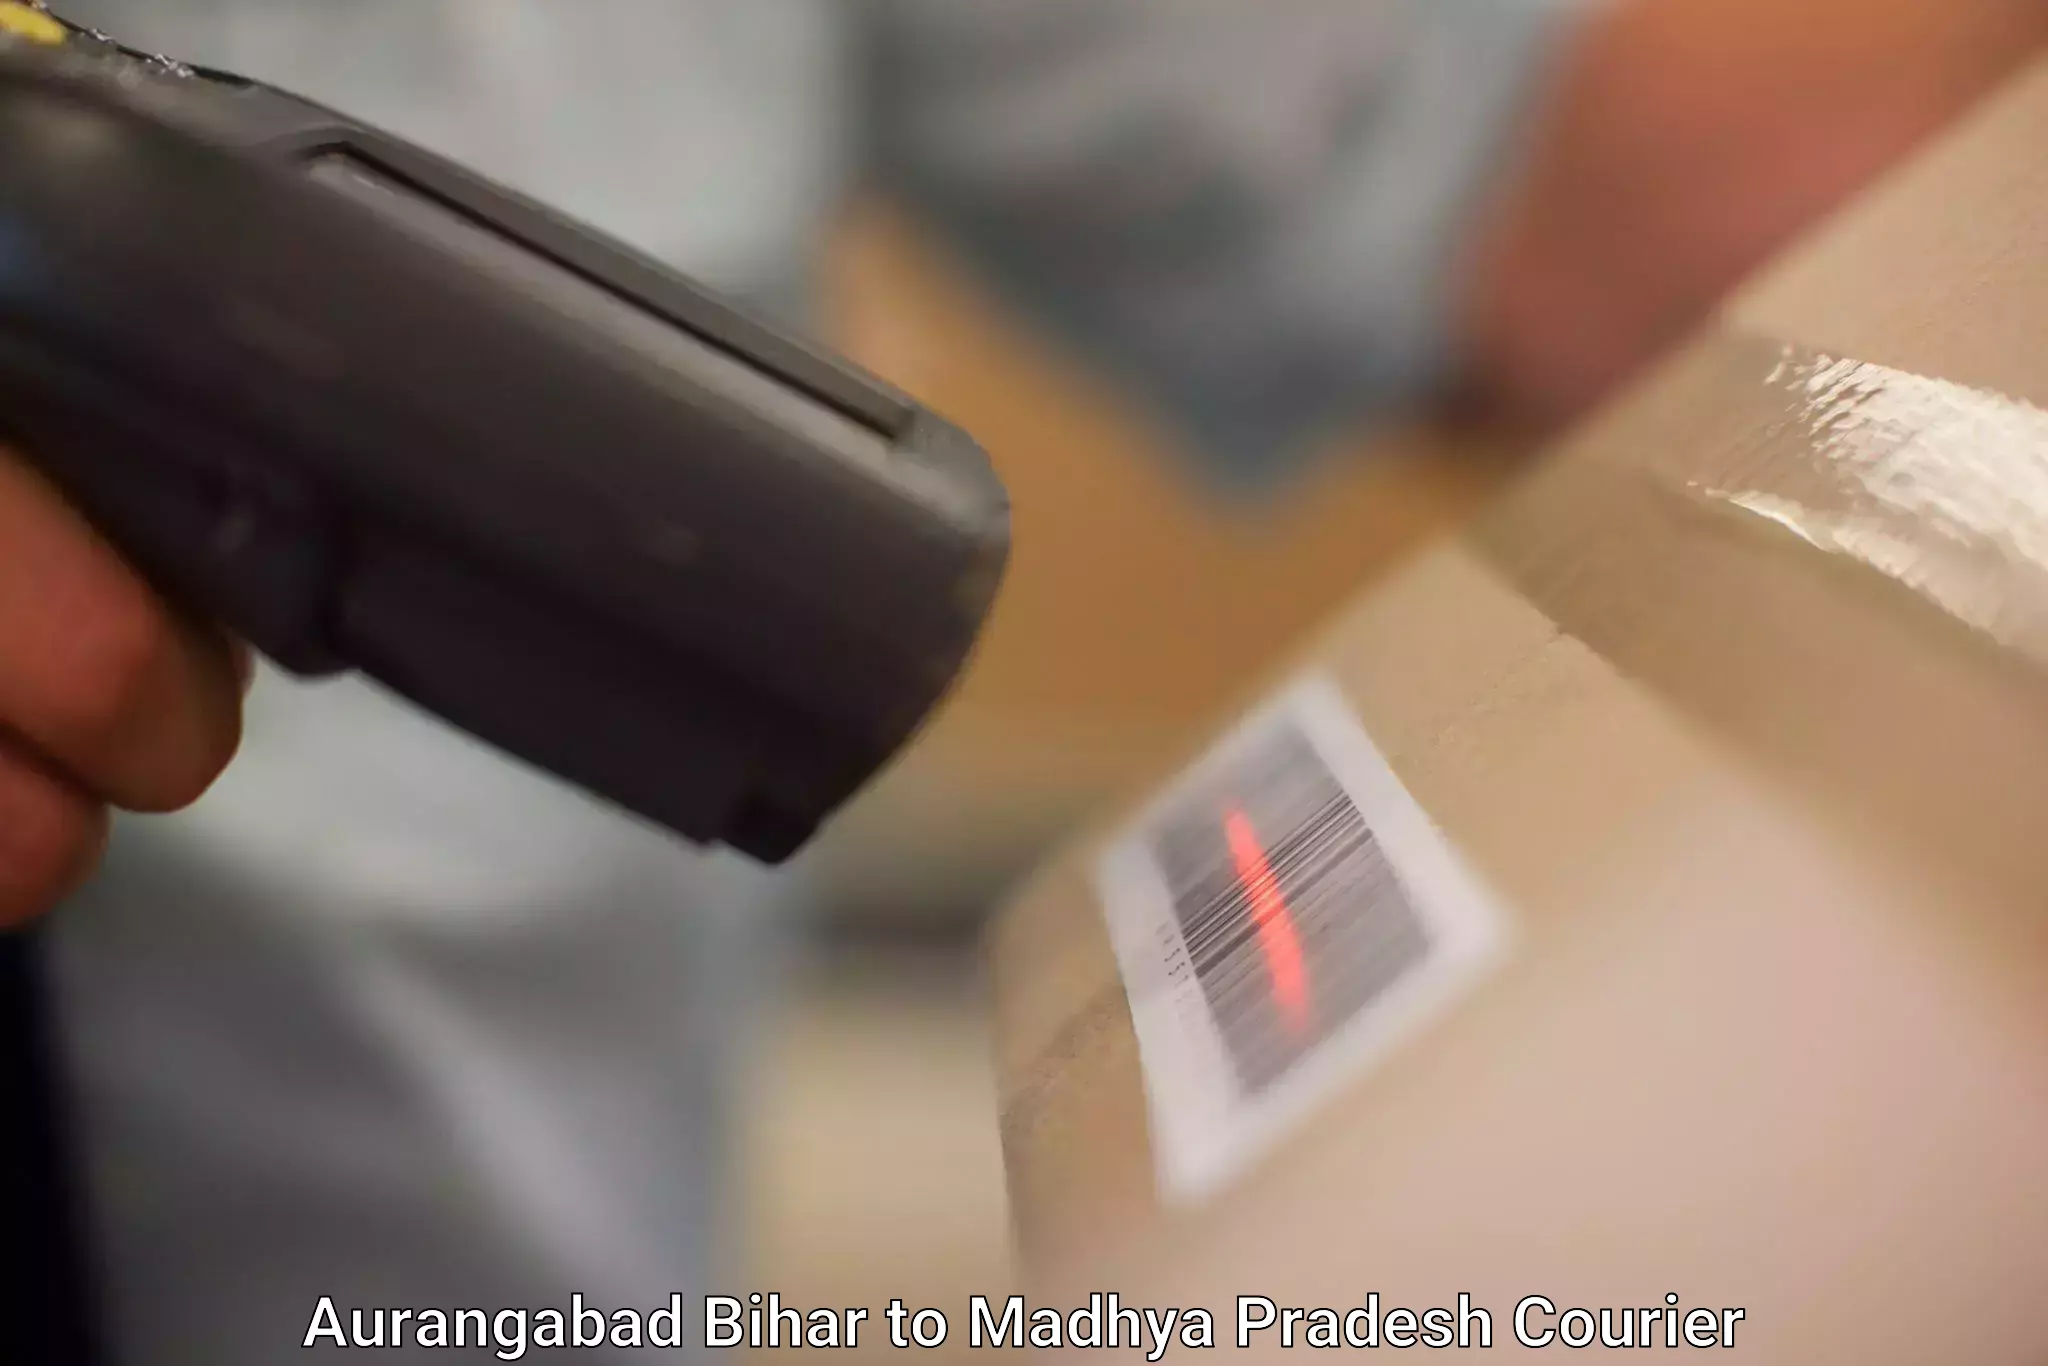 Special handling courier Aurangabad Bihar to Nainpur